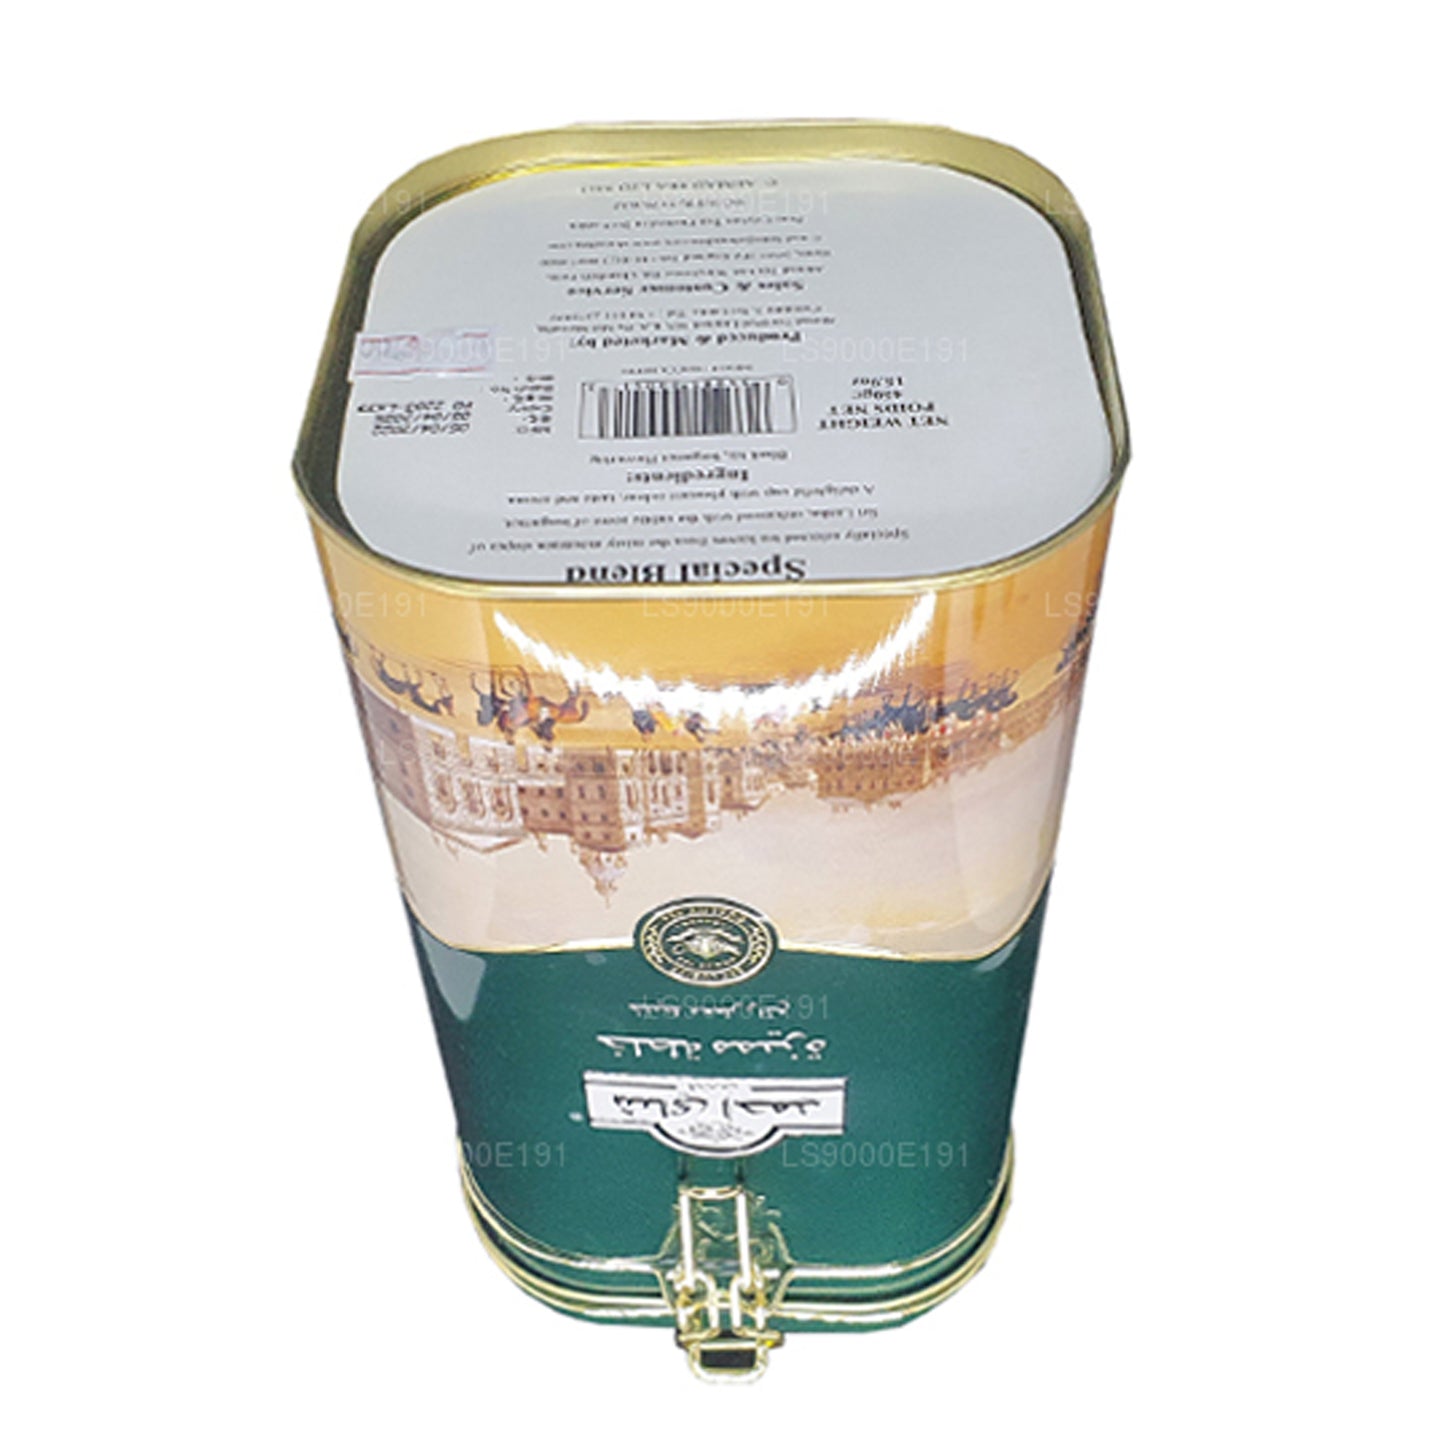 Ahmad Tea Special Blend Scharnierdose (450 g)